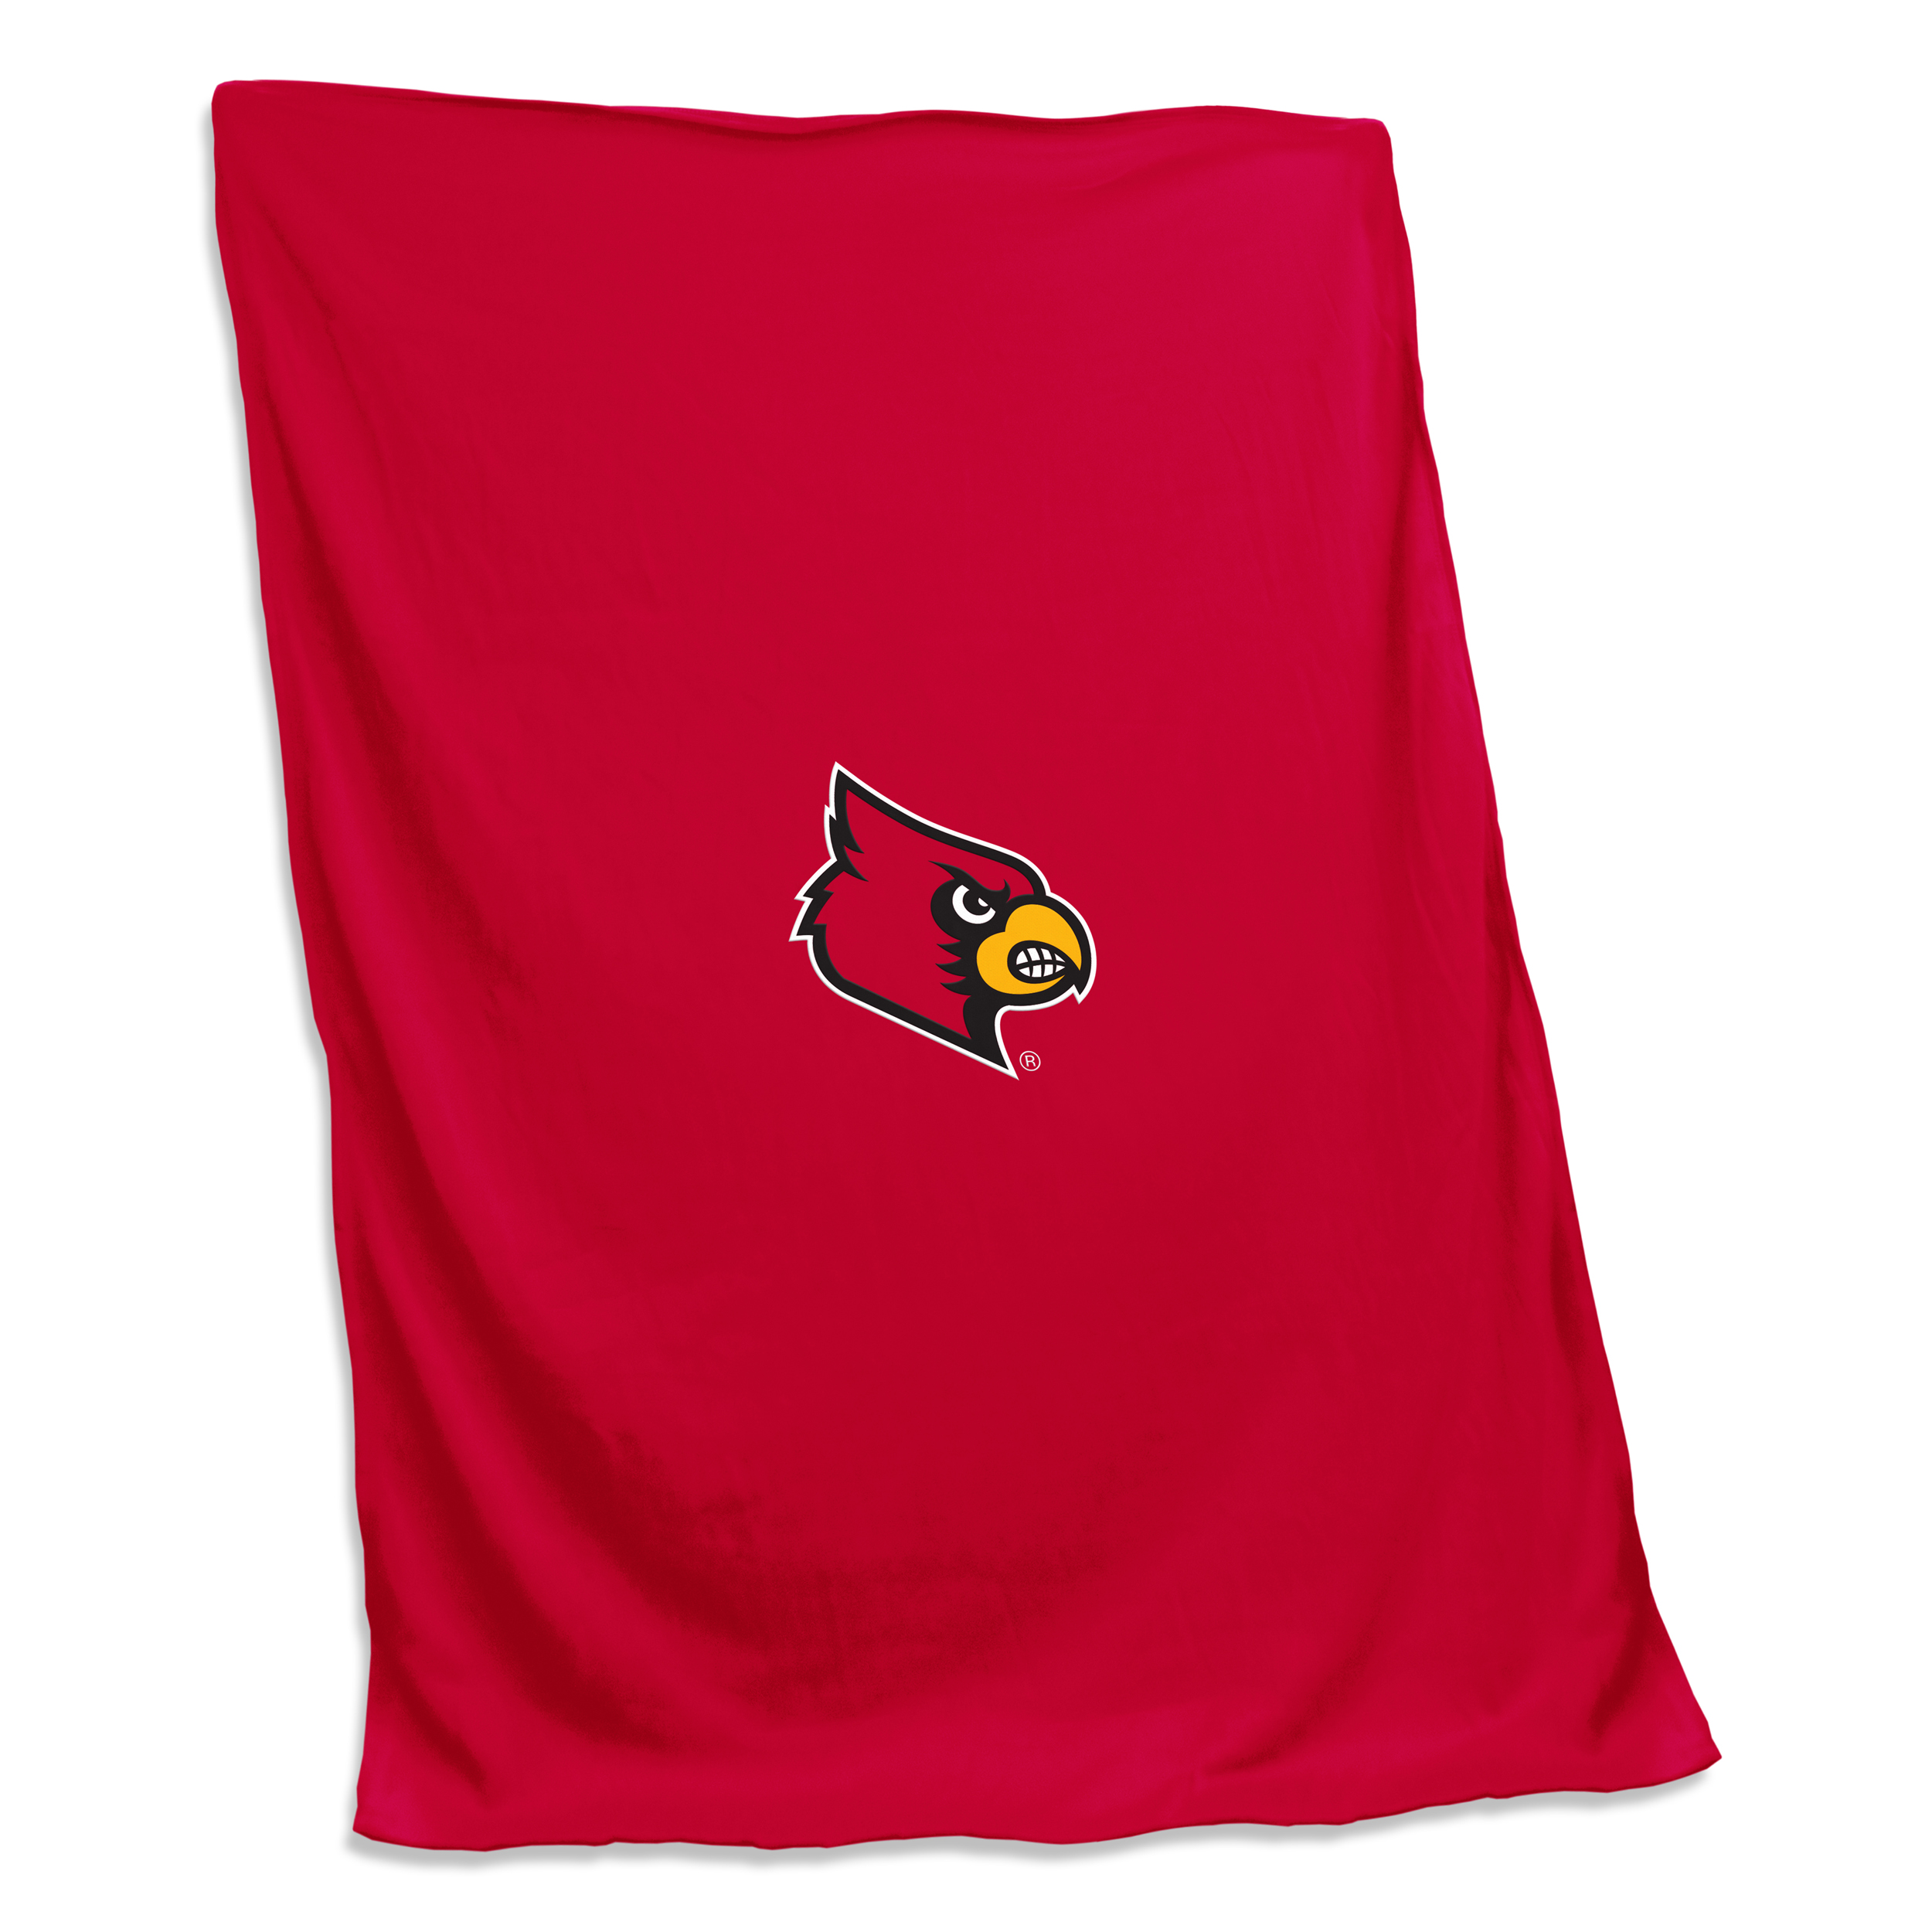 louisville cardinals throw blanket